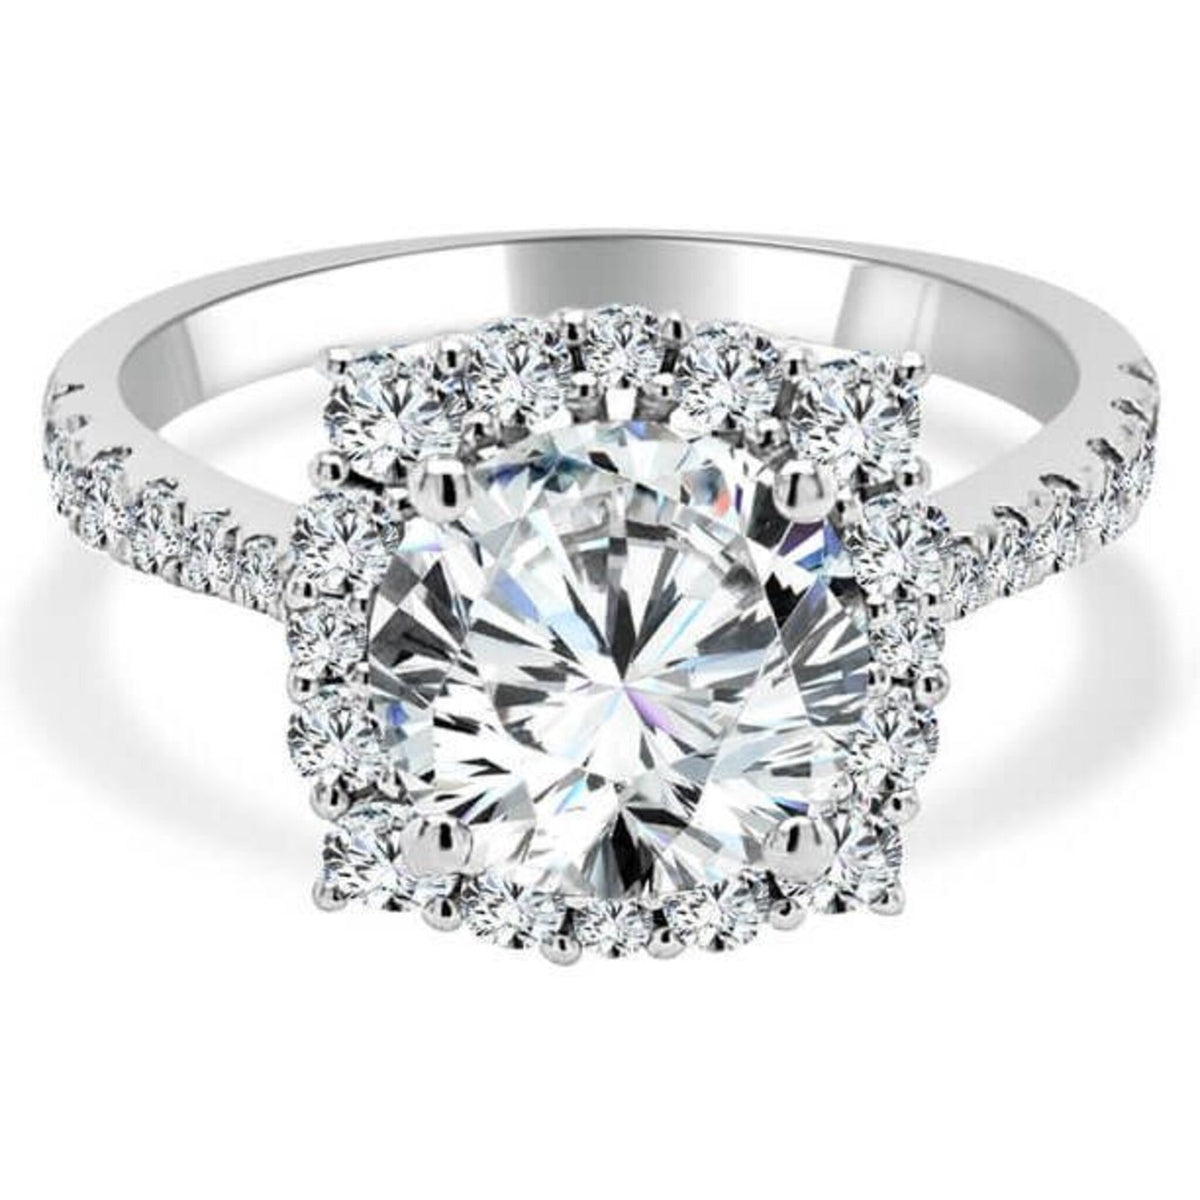 Beautiful Imagine Bridal engagement ring semi-mount displayed against a backdrop